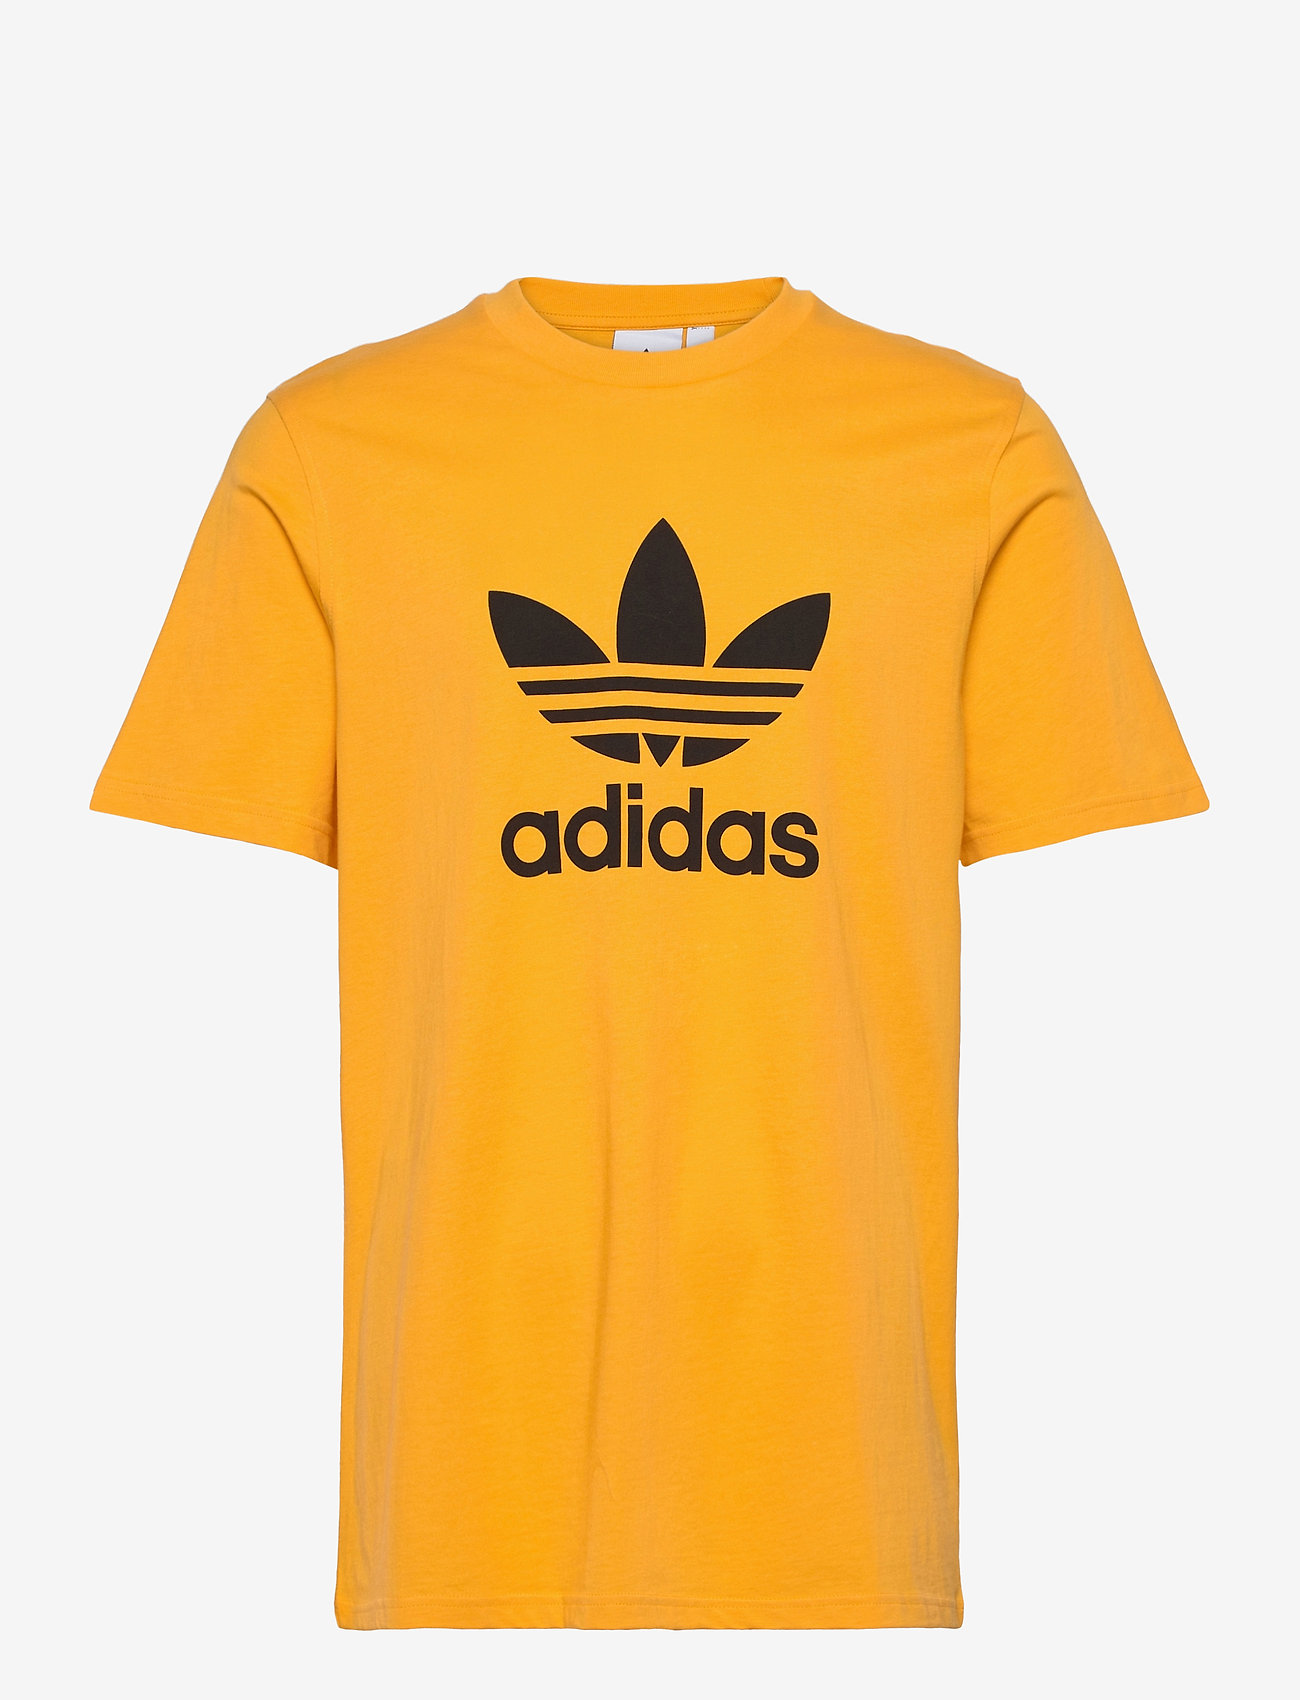 adidas trefoil t shirt yellow